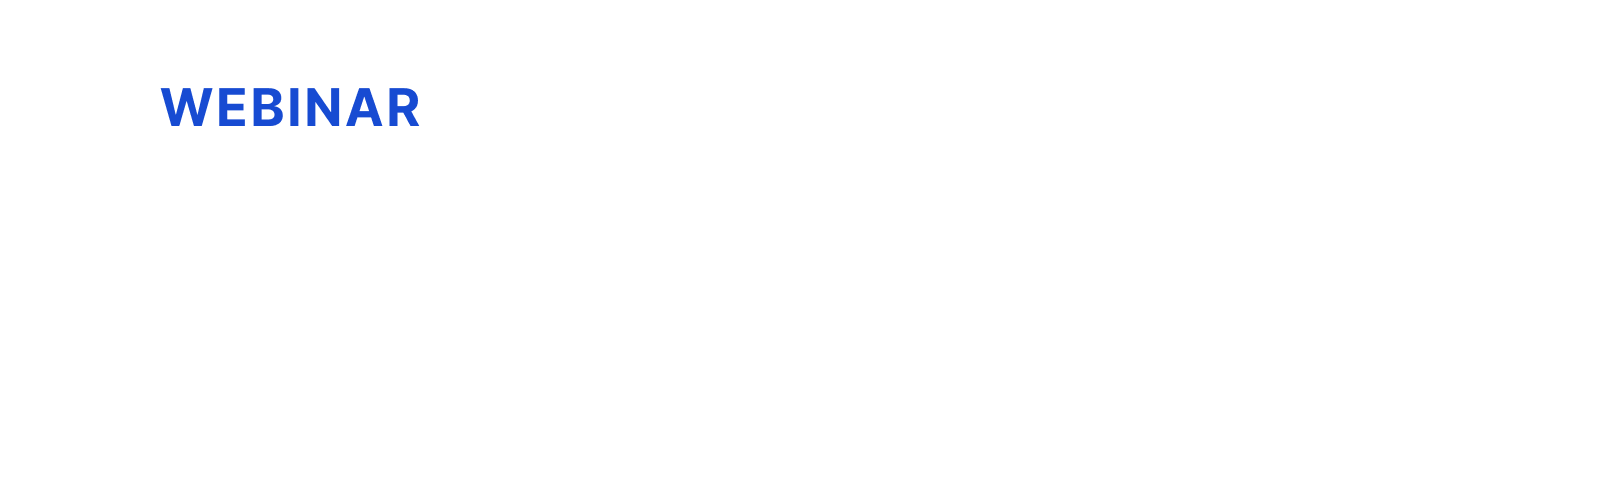 Video Marketing Trends in 2023